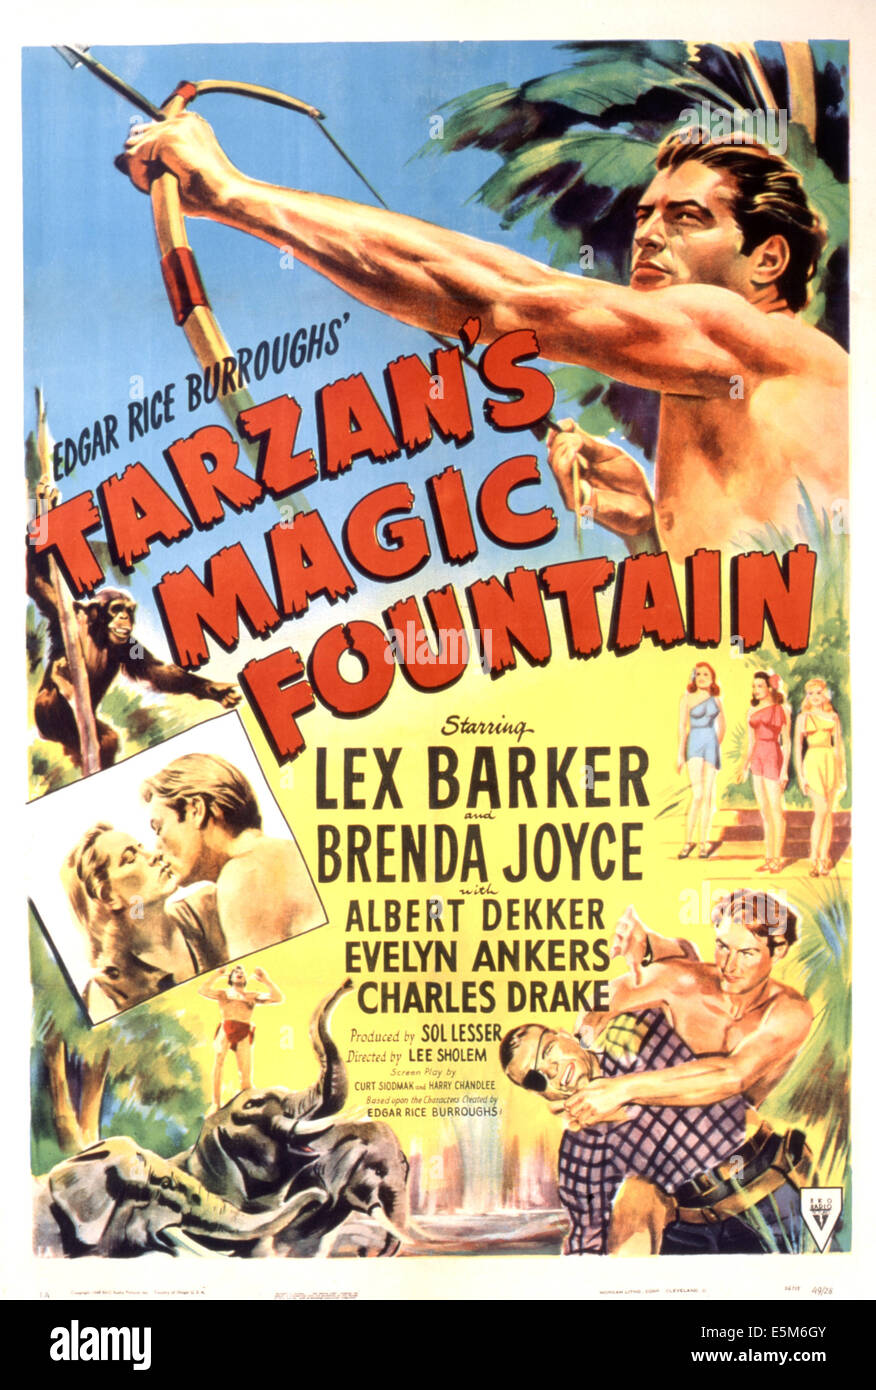 TARZAN e la fontana magica, Brenda Joyce, Lex Barker, 1949 Foto stock -  Alamy